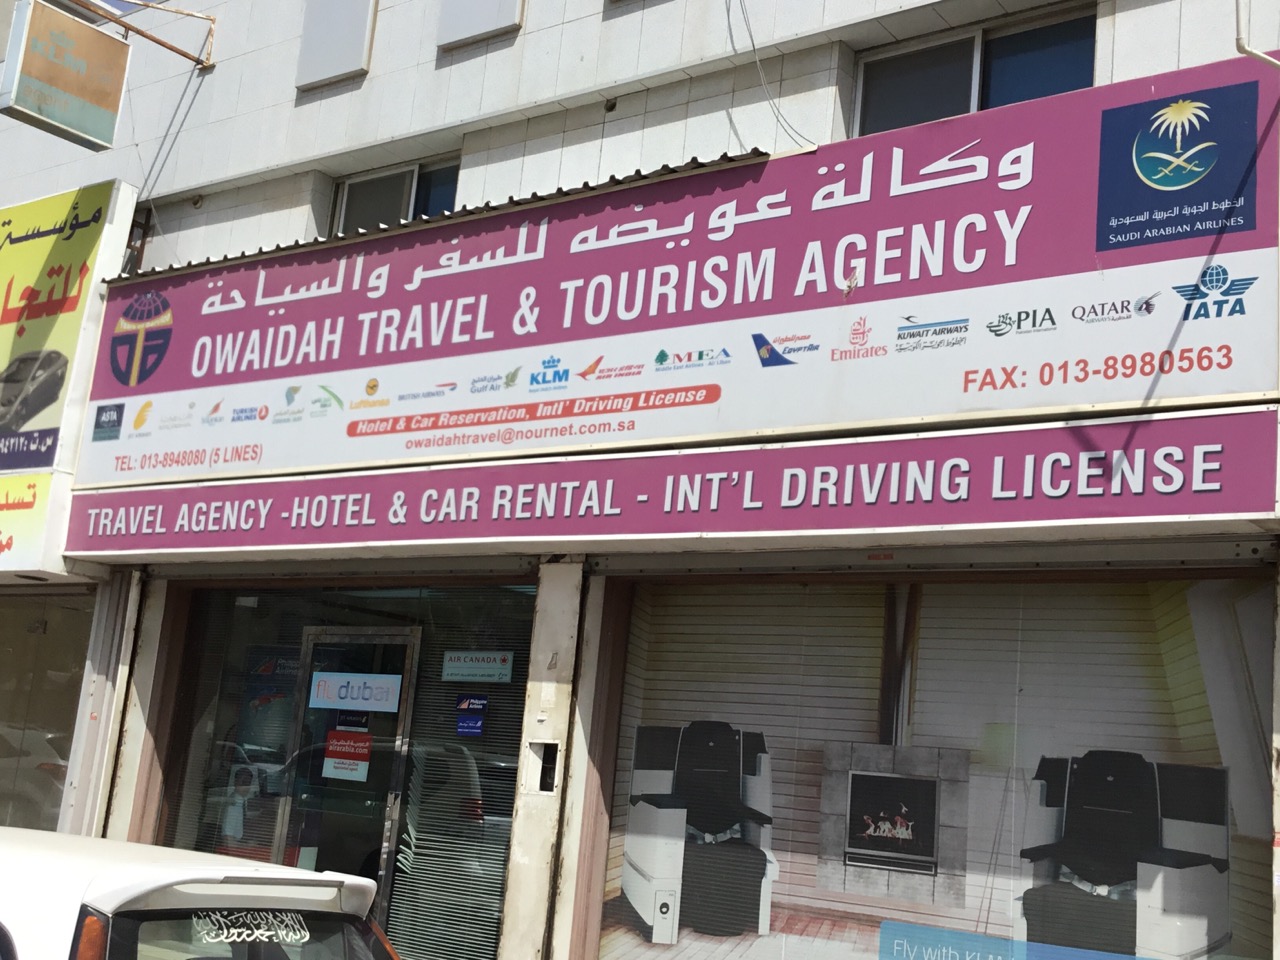 owaidah travel & tourism agency